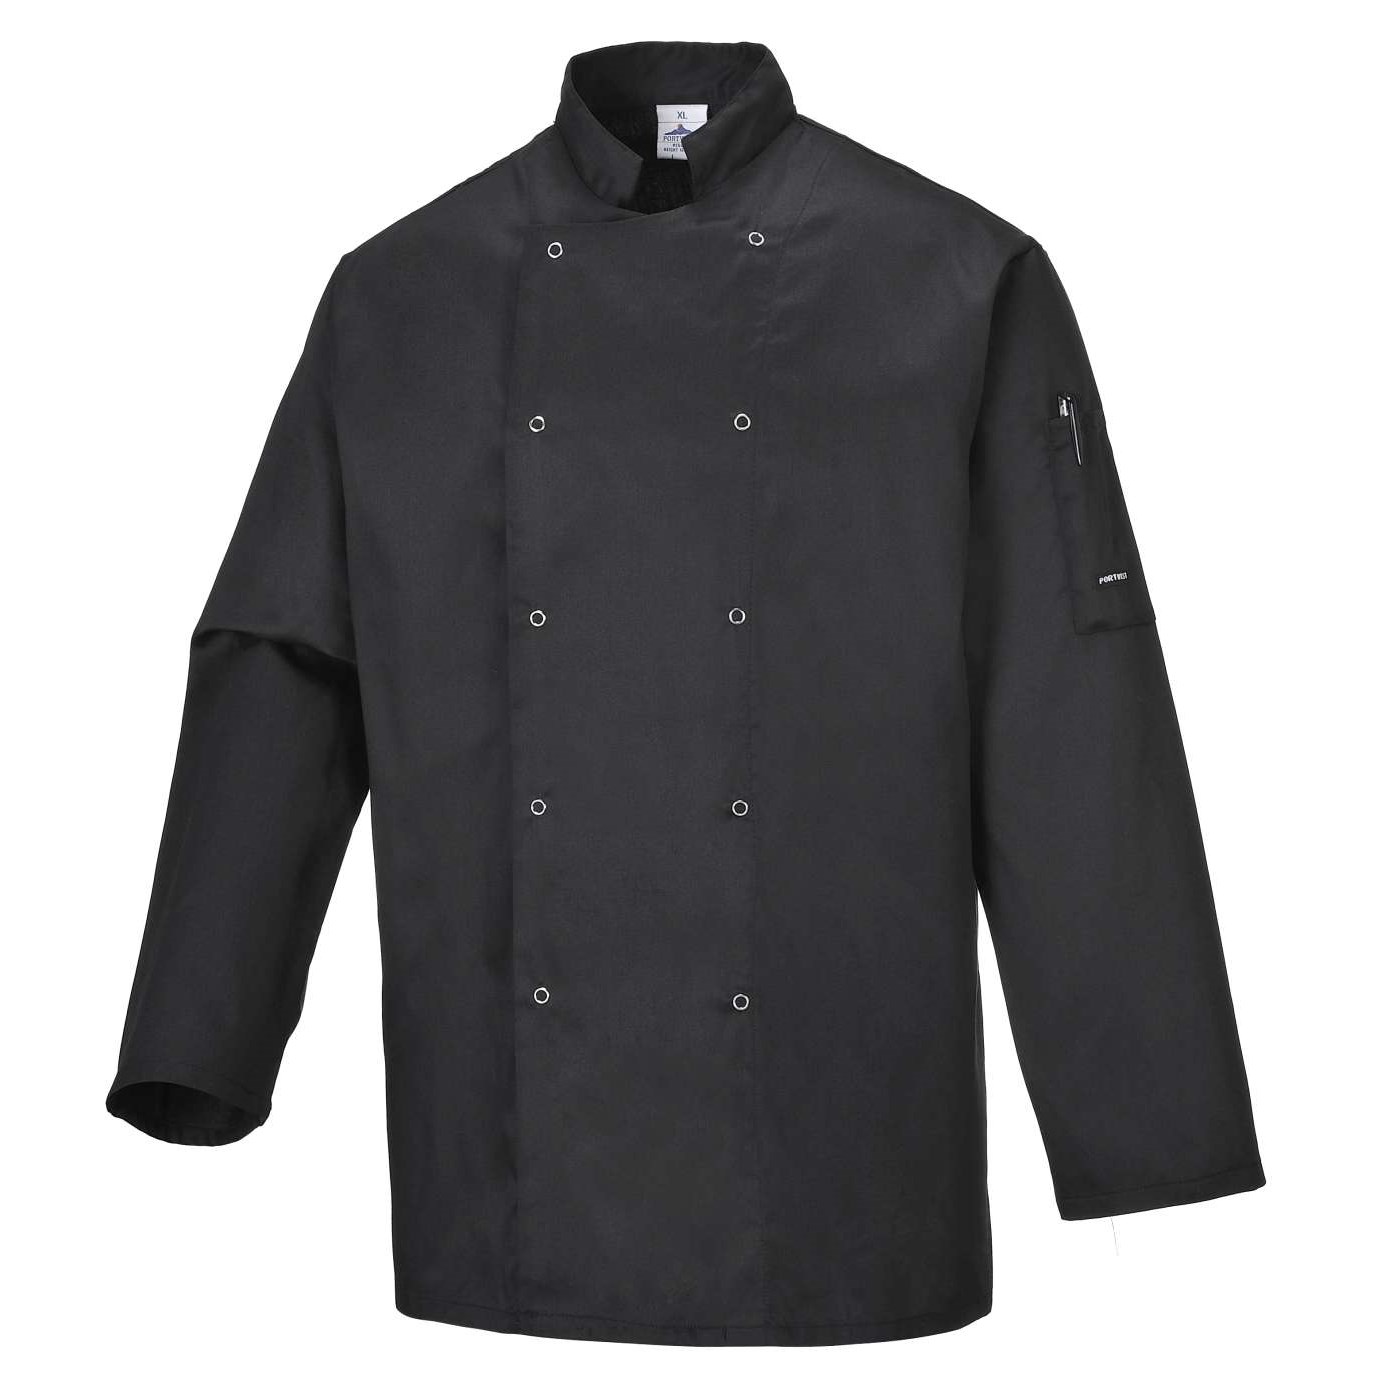 PORTWEST C833 Suffolk black or white unisex long sleeve chefs jacket size XS-3XL 